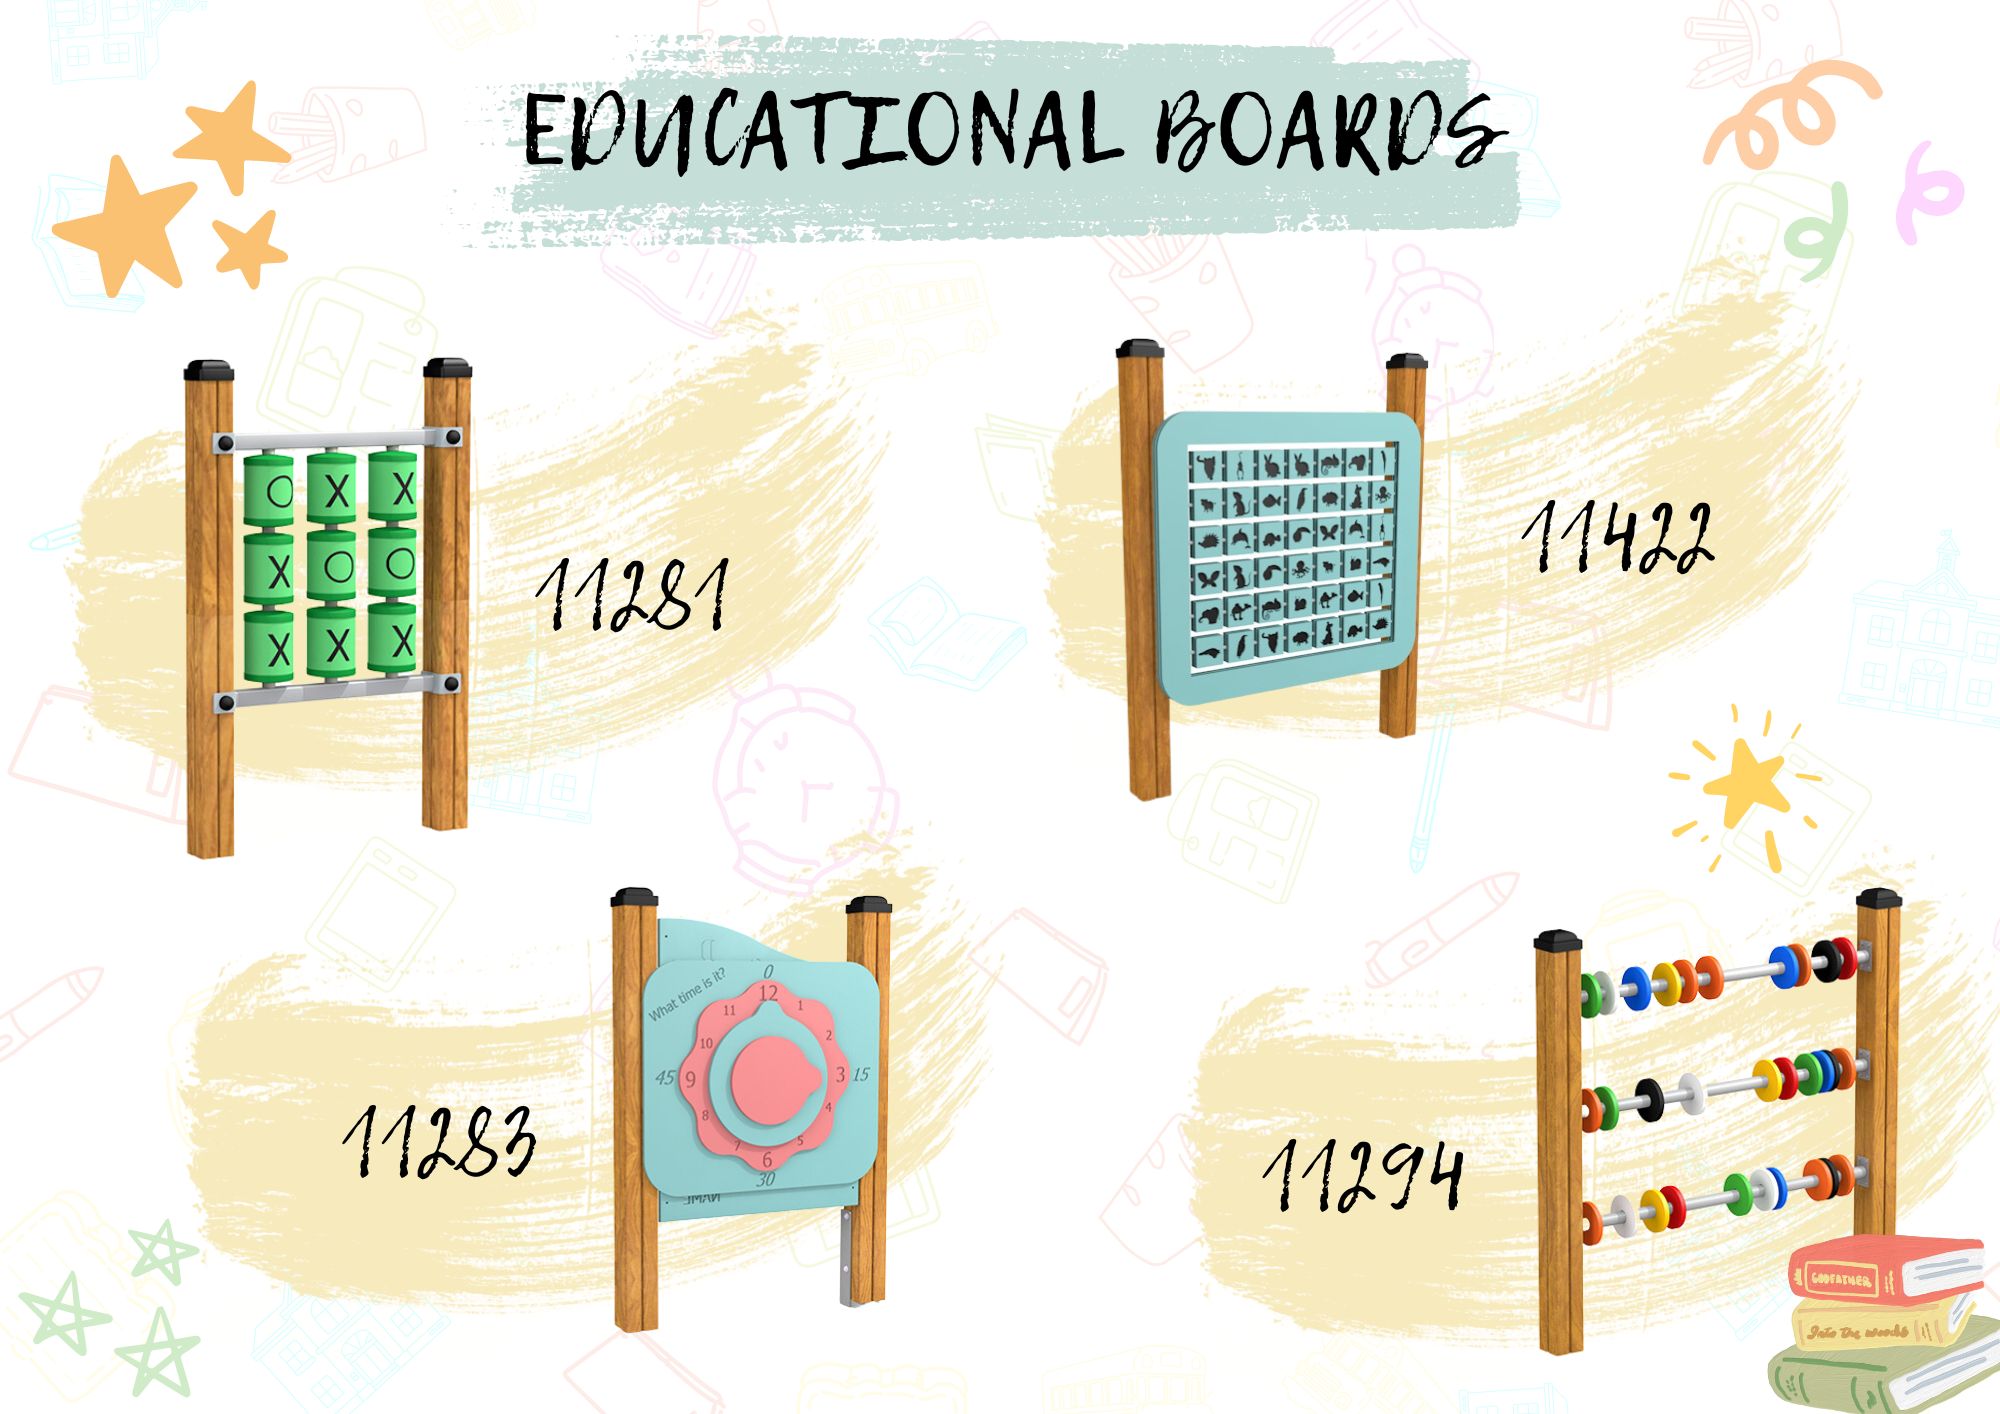 educational boards